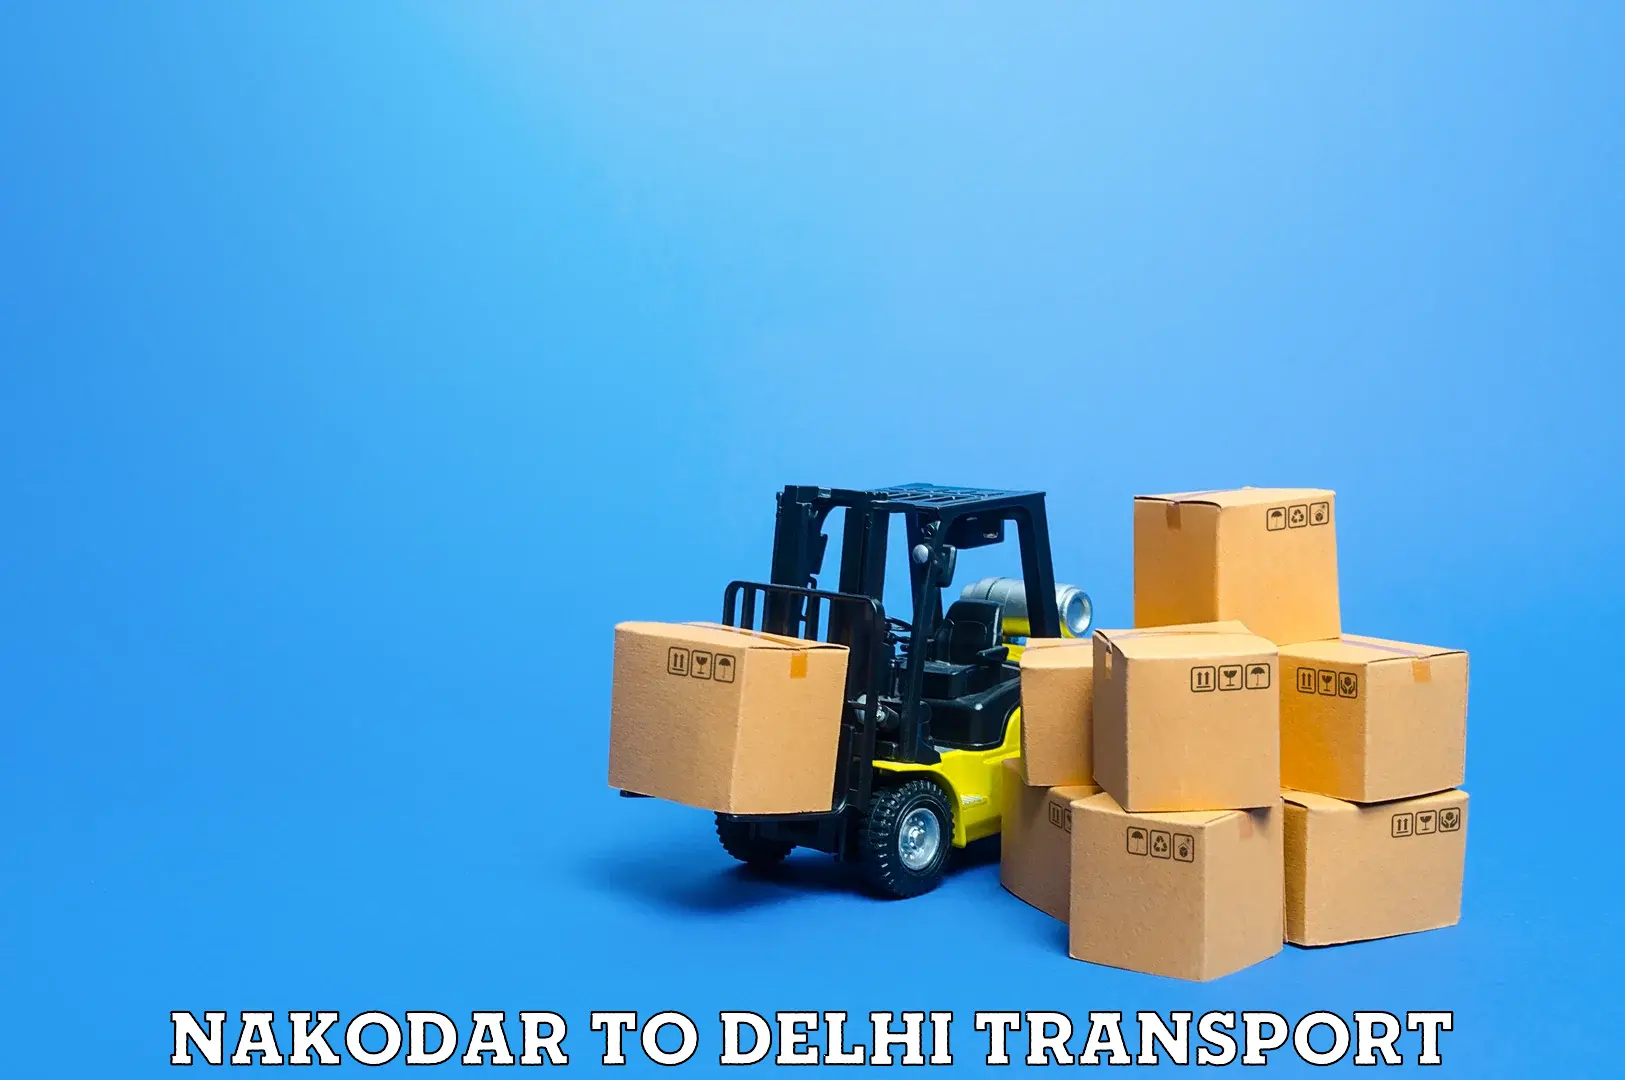 Sending bike to another city Nakodar to Delhi